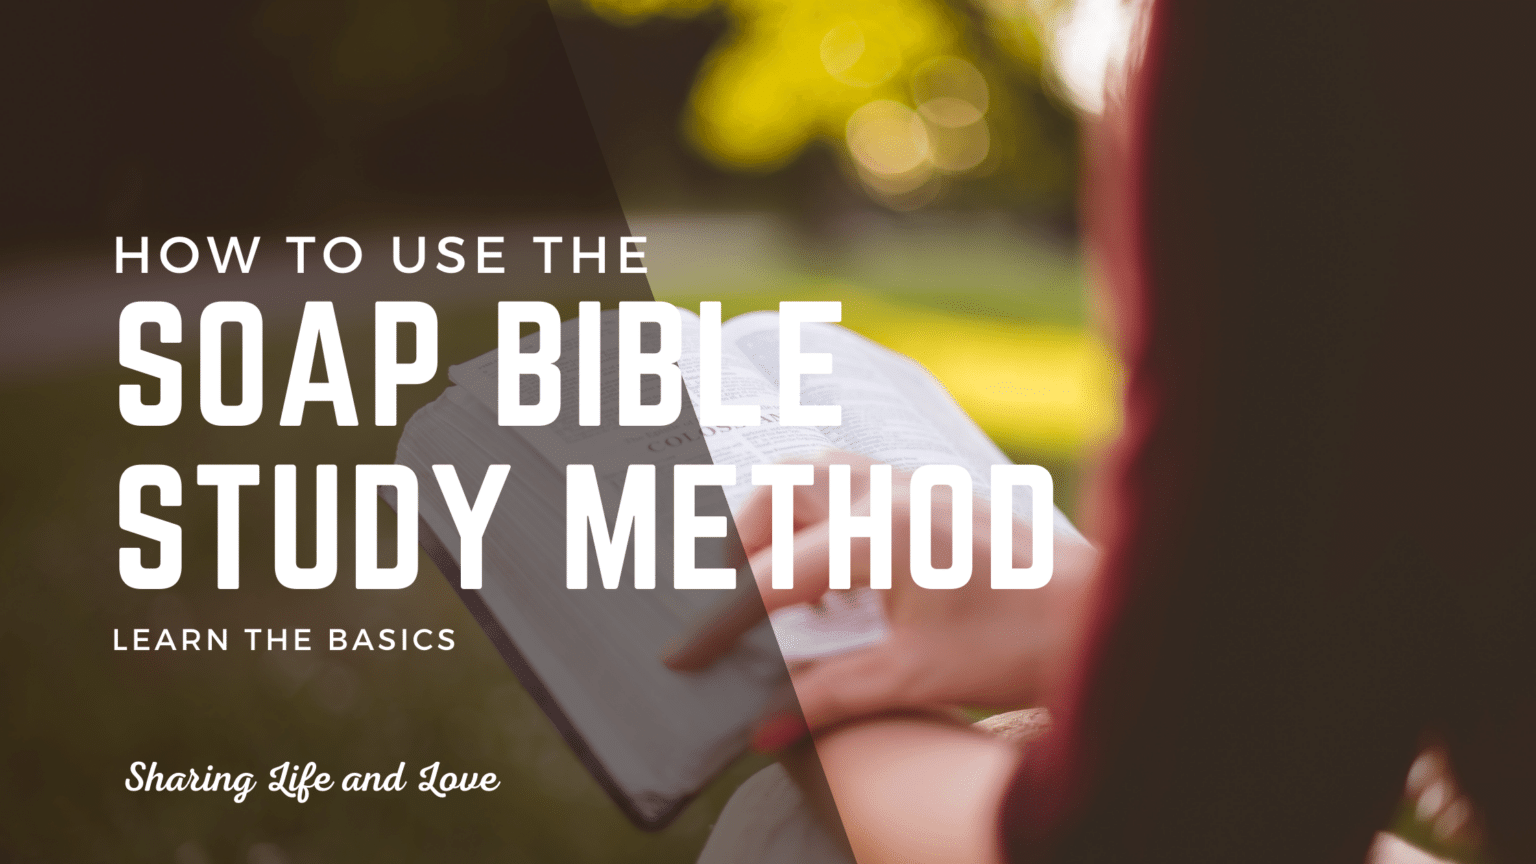 example of soap bible study method